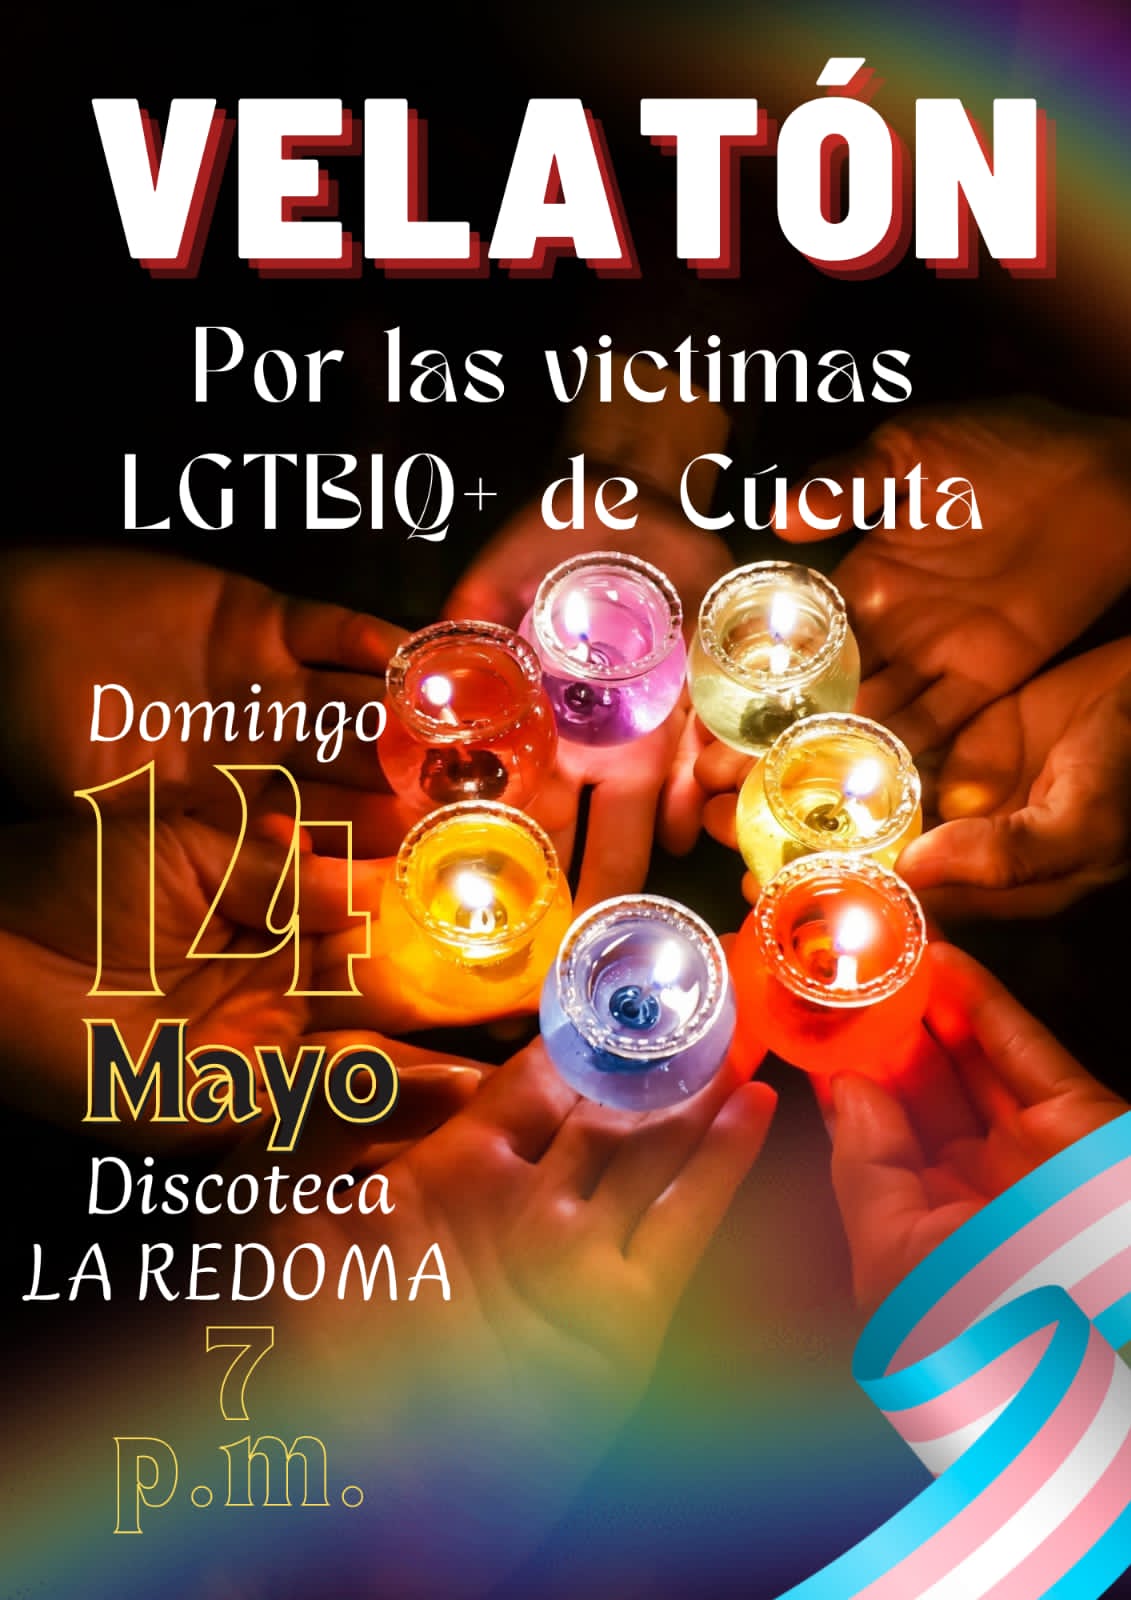  17 de Mayo - Da Internacional contra la Homofobia, Transfobia y Bifobia / May 17 - International Day Against Homophobia, Transphobia and Biphobia 